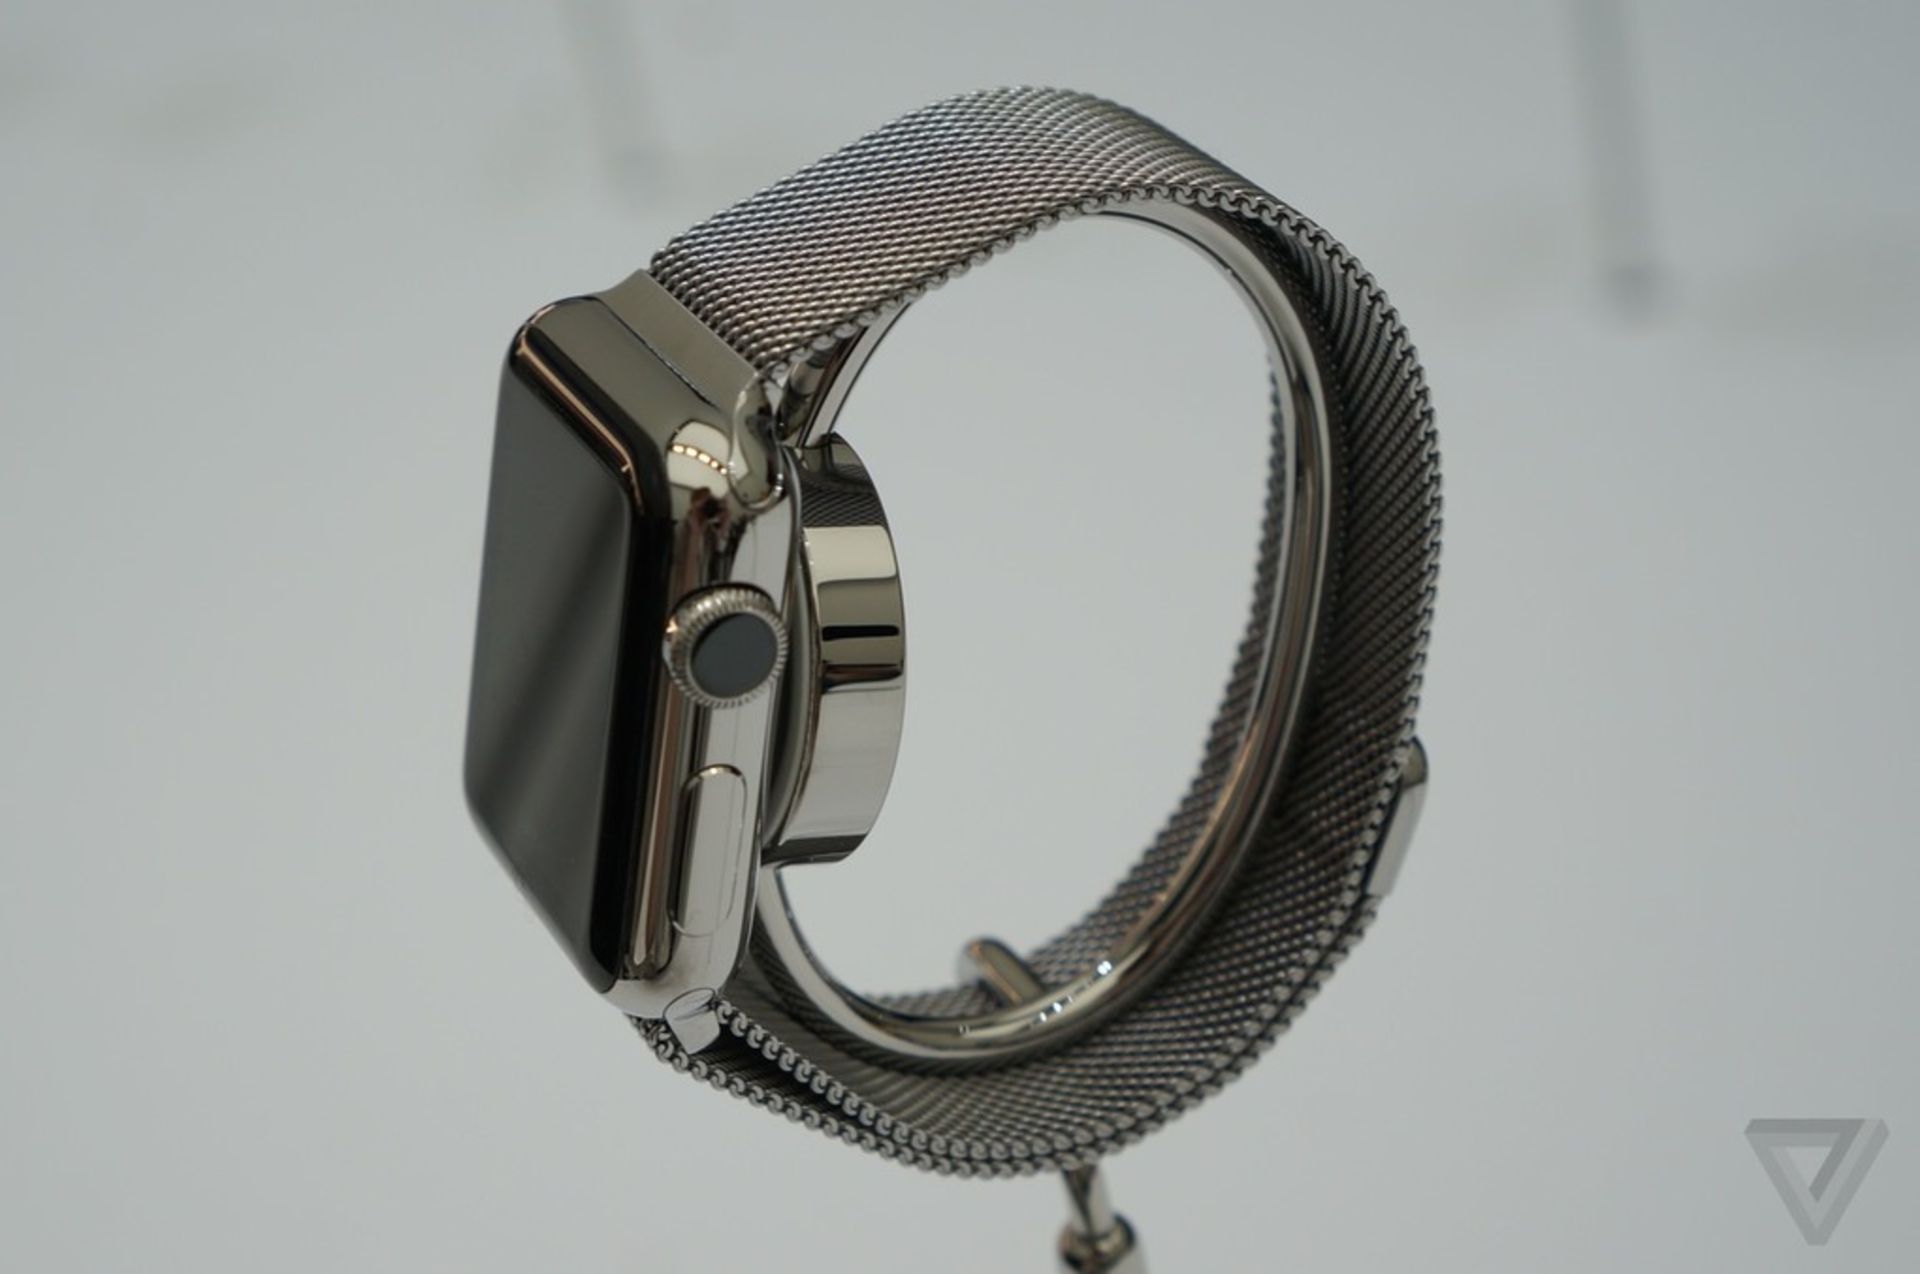 apple-watch-2-theverge-8 1320 verge super wide